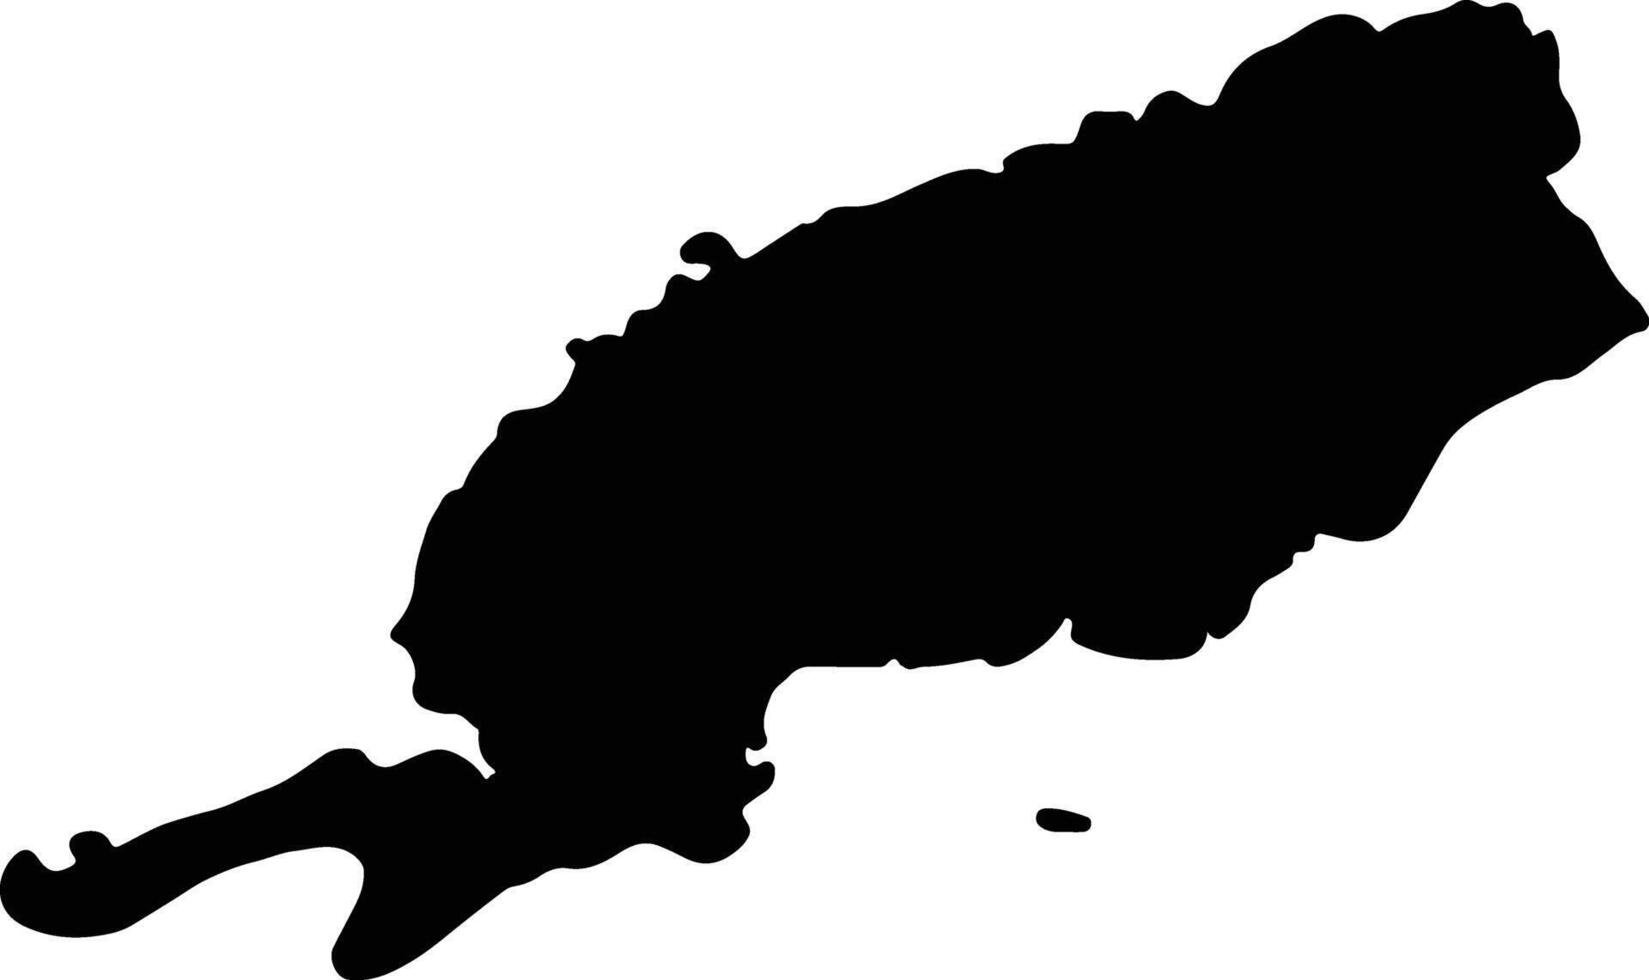 épingler del Rio Cuba silhouette carte vecteur